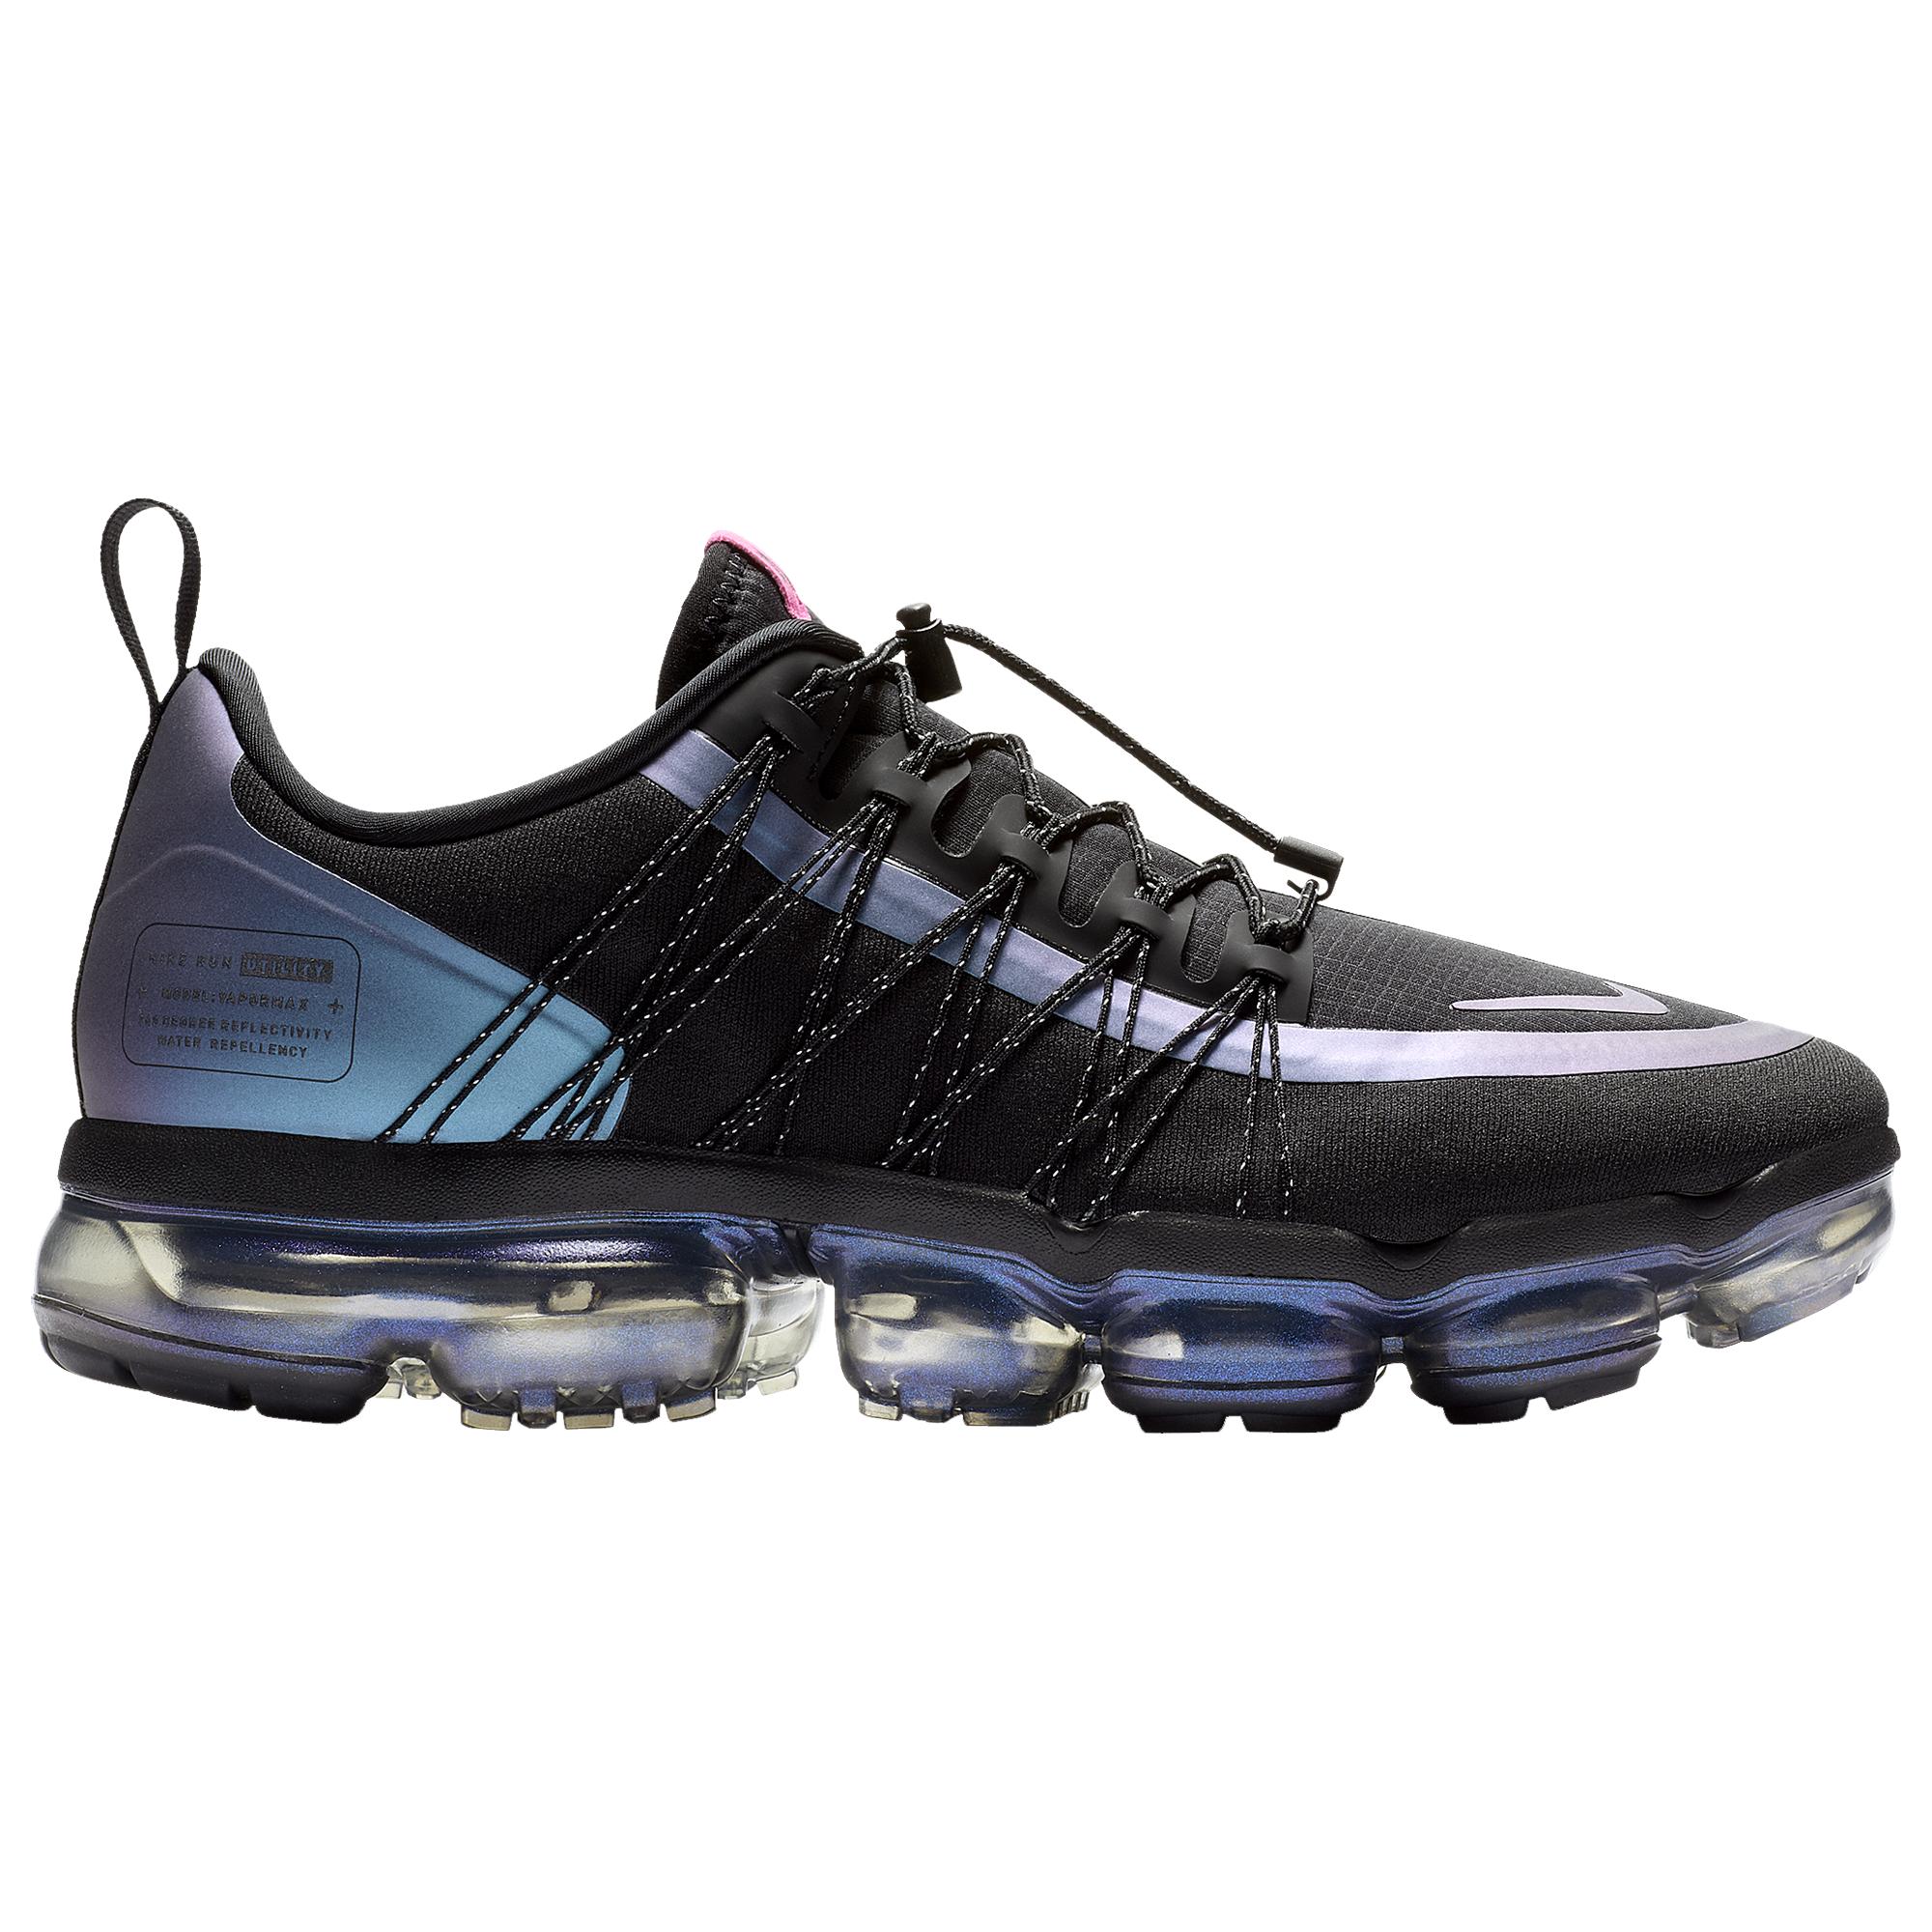 Nike Air Vapormax Run Utility Running Shoes in Black/Blue (Black ...